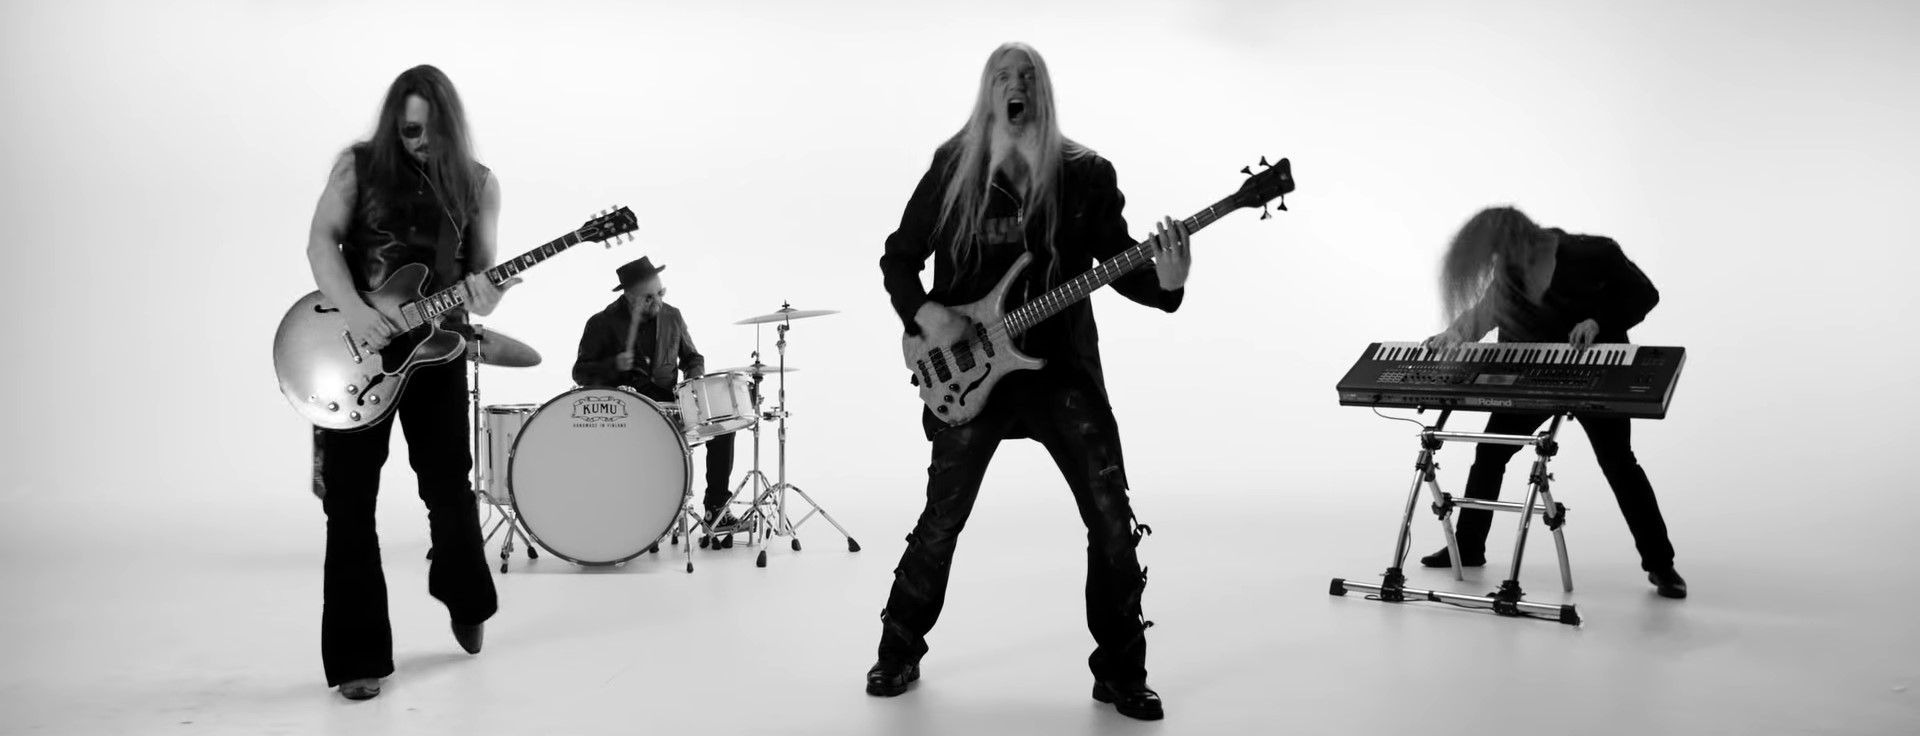 Marko Hietala - Stones (Official)